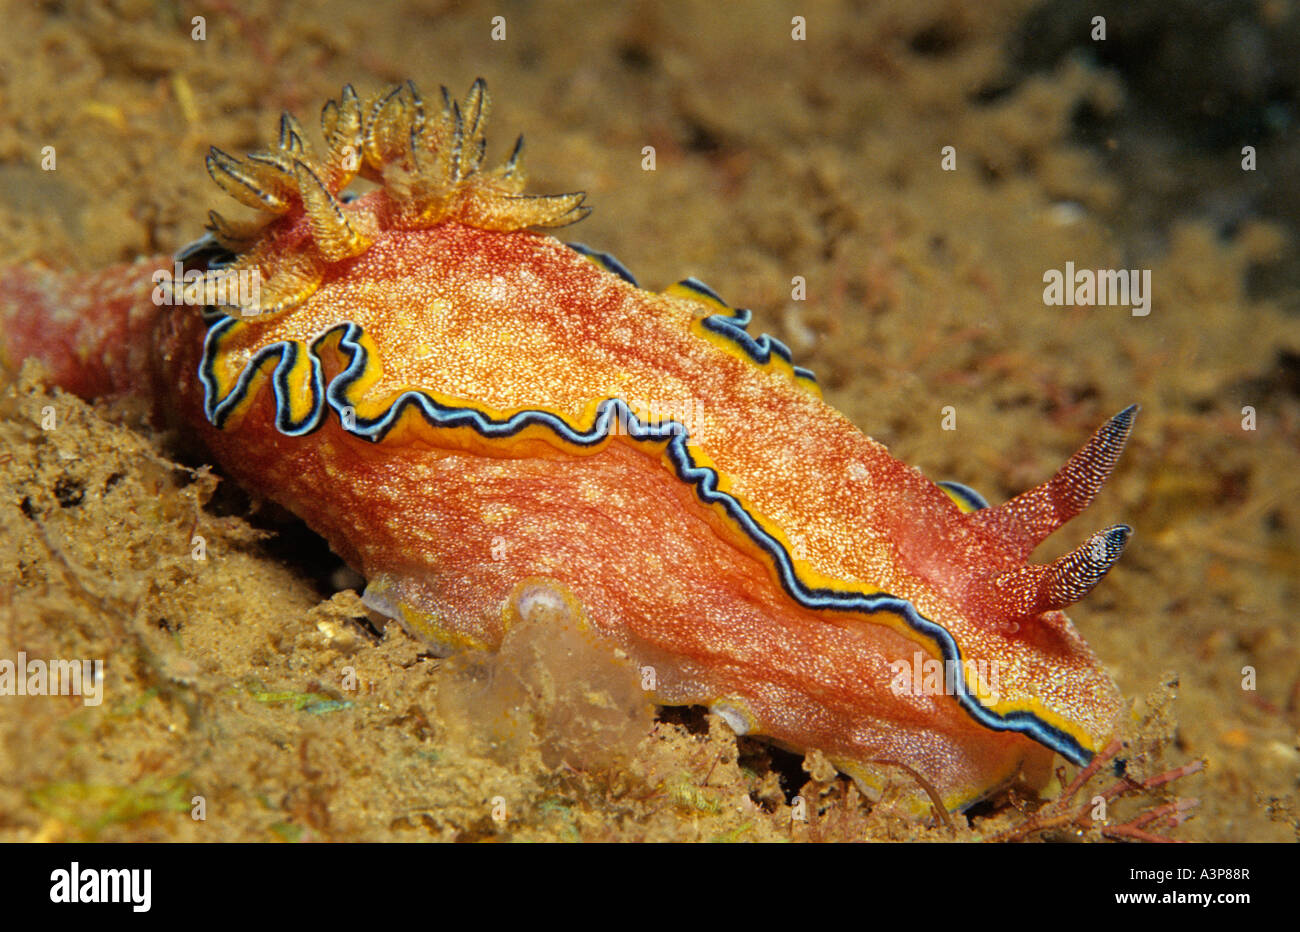 Nudibranch Glossodoris cincta Sea Slug blue yellow stripped skirt with red body Ko Lanta Thailand Stock Photo